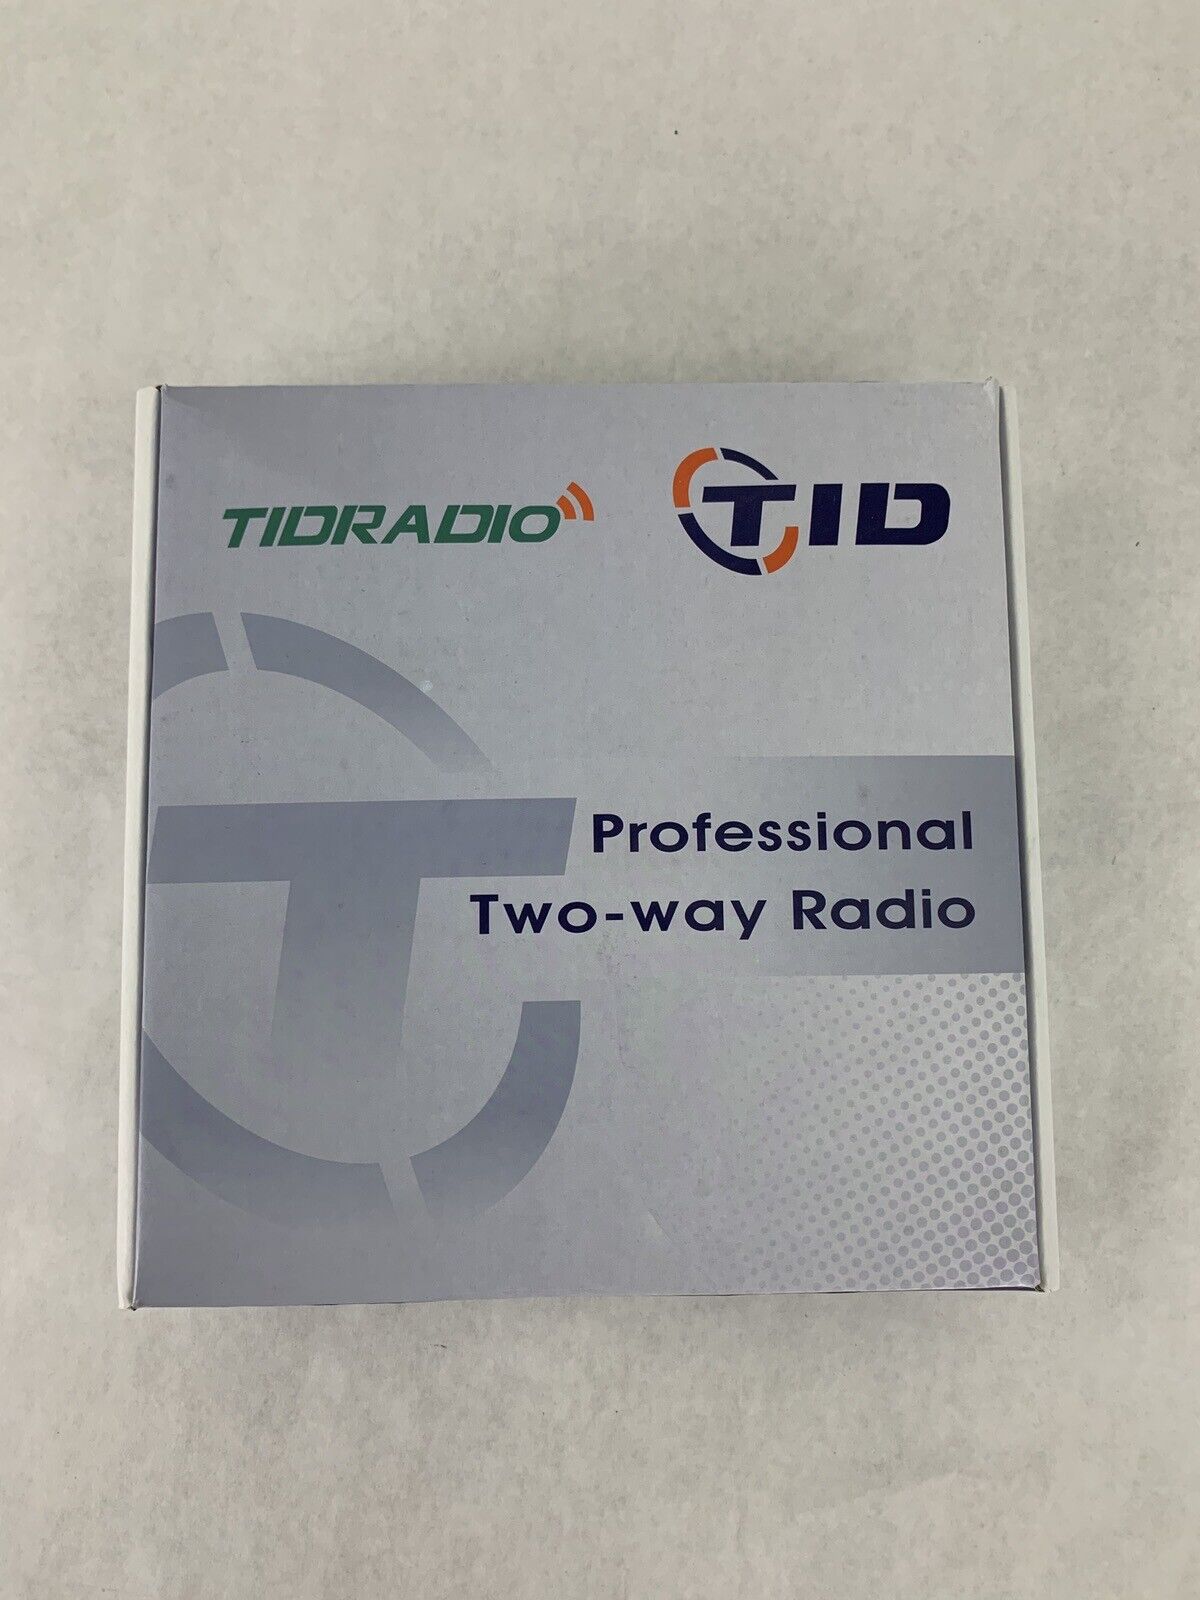 New Box Opened Tidradio 2-way Radios Model TD-V2 VHF/UHF FM Transceiver